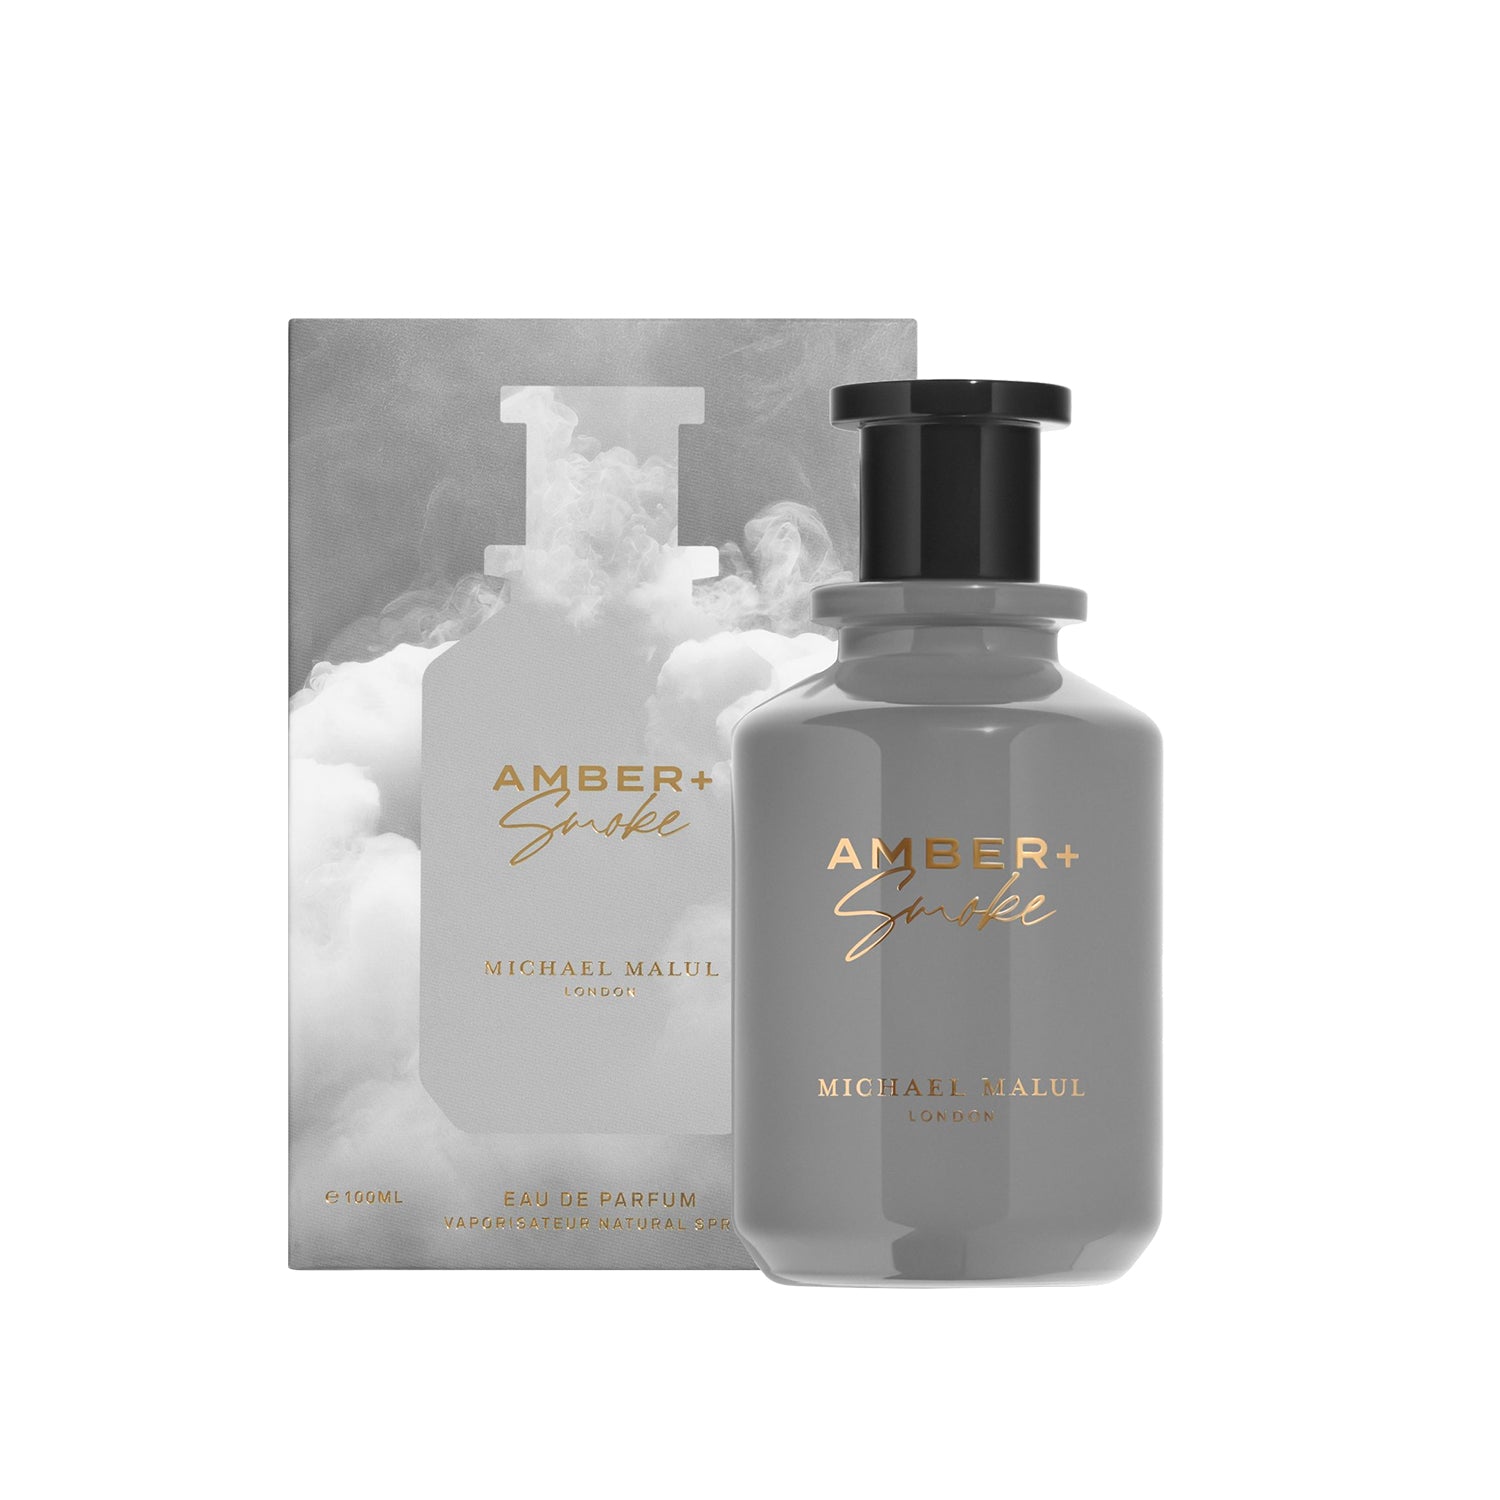 Amber + Smoke Eau de Parfum Spray for Men by Michael Malul, Product image 1